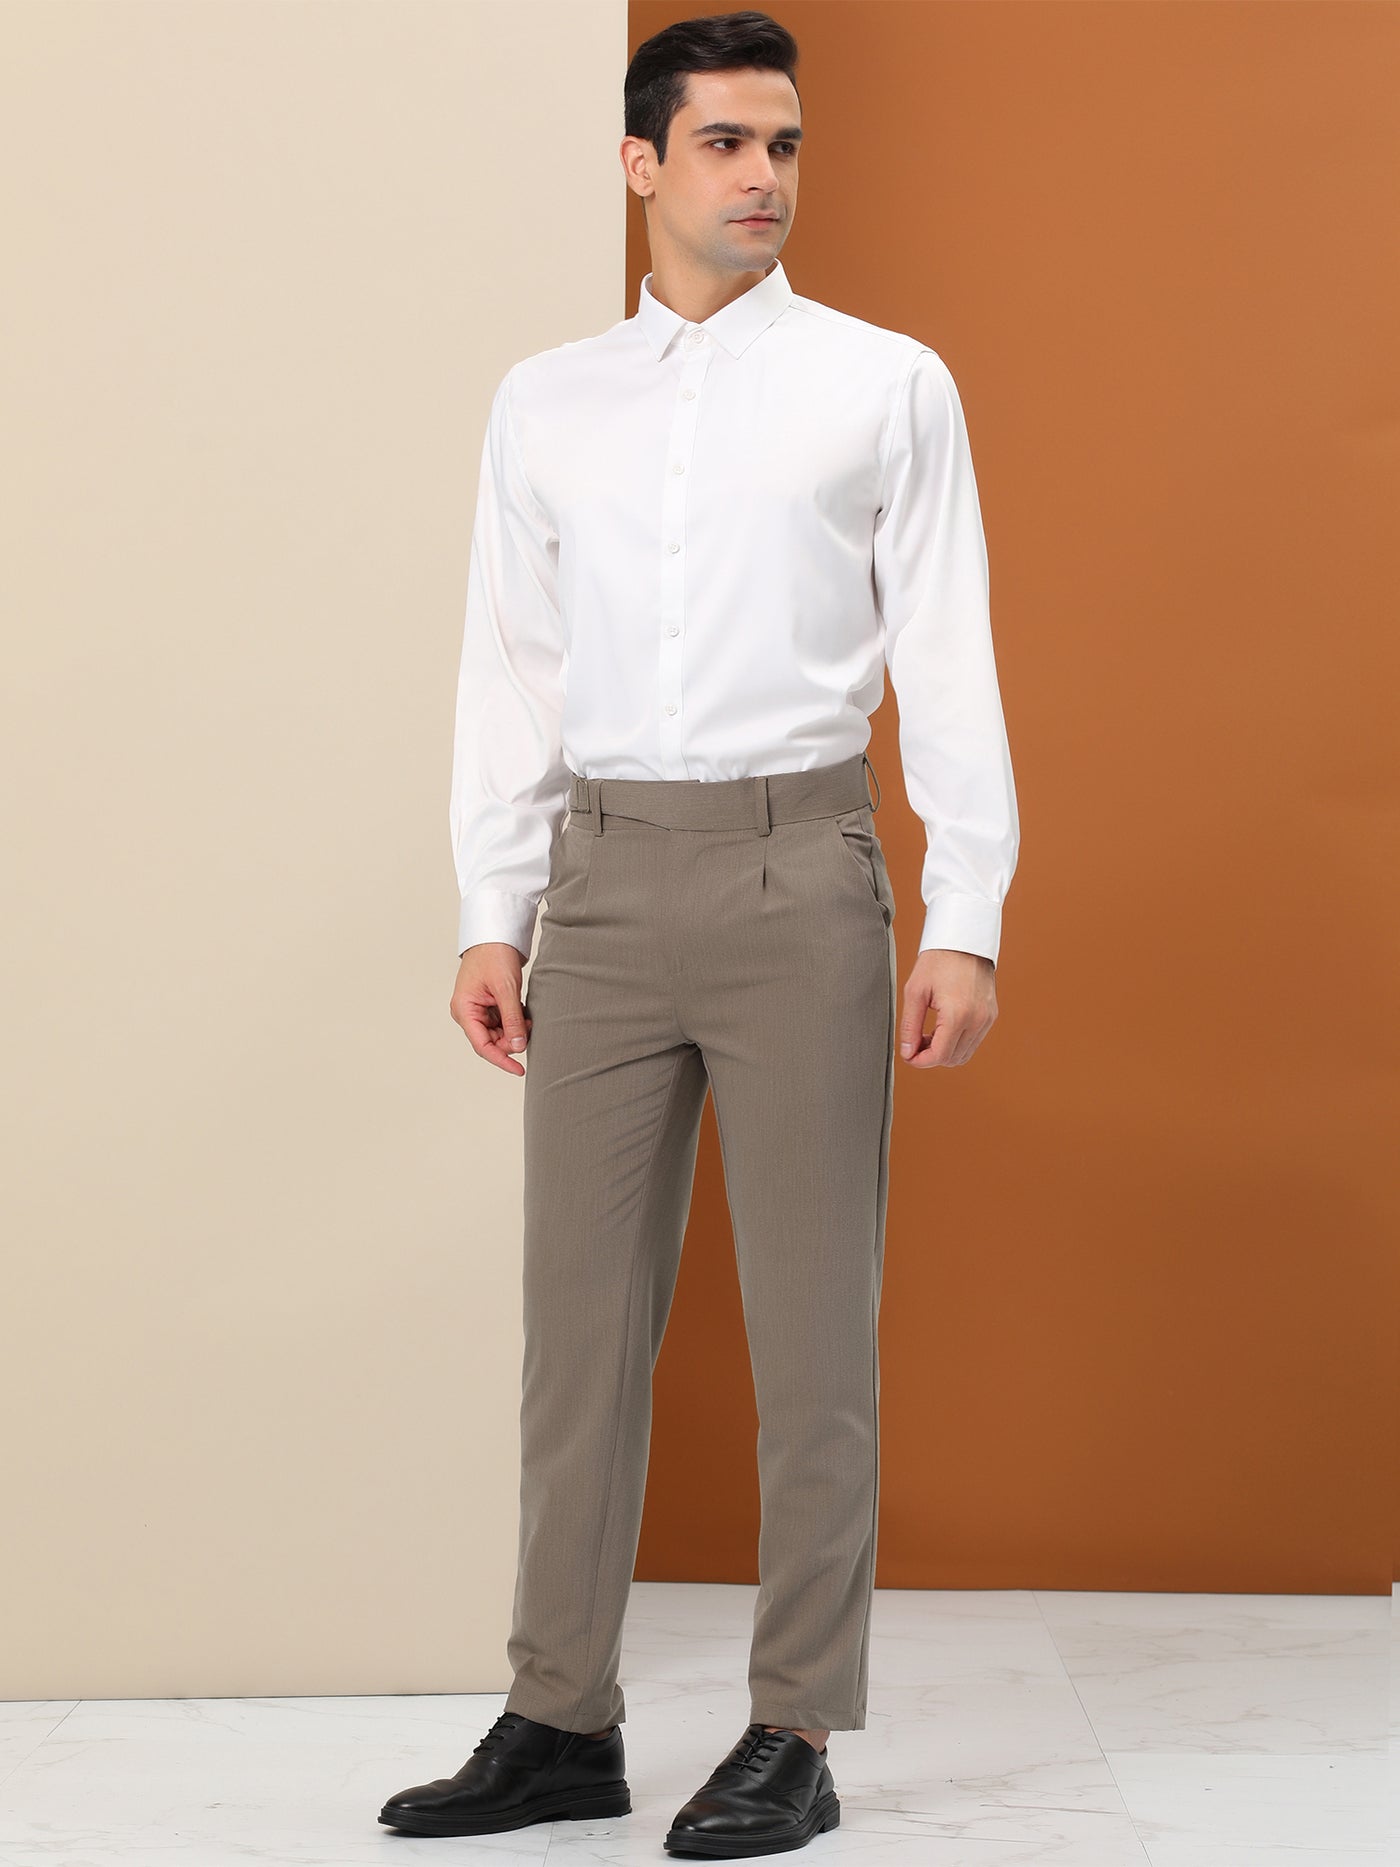 Bublédon Men's Business Chino Pants Solid Color Slim Fit Flat Front Trousers